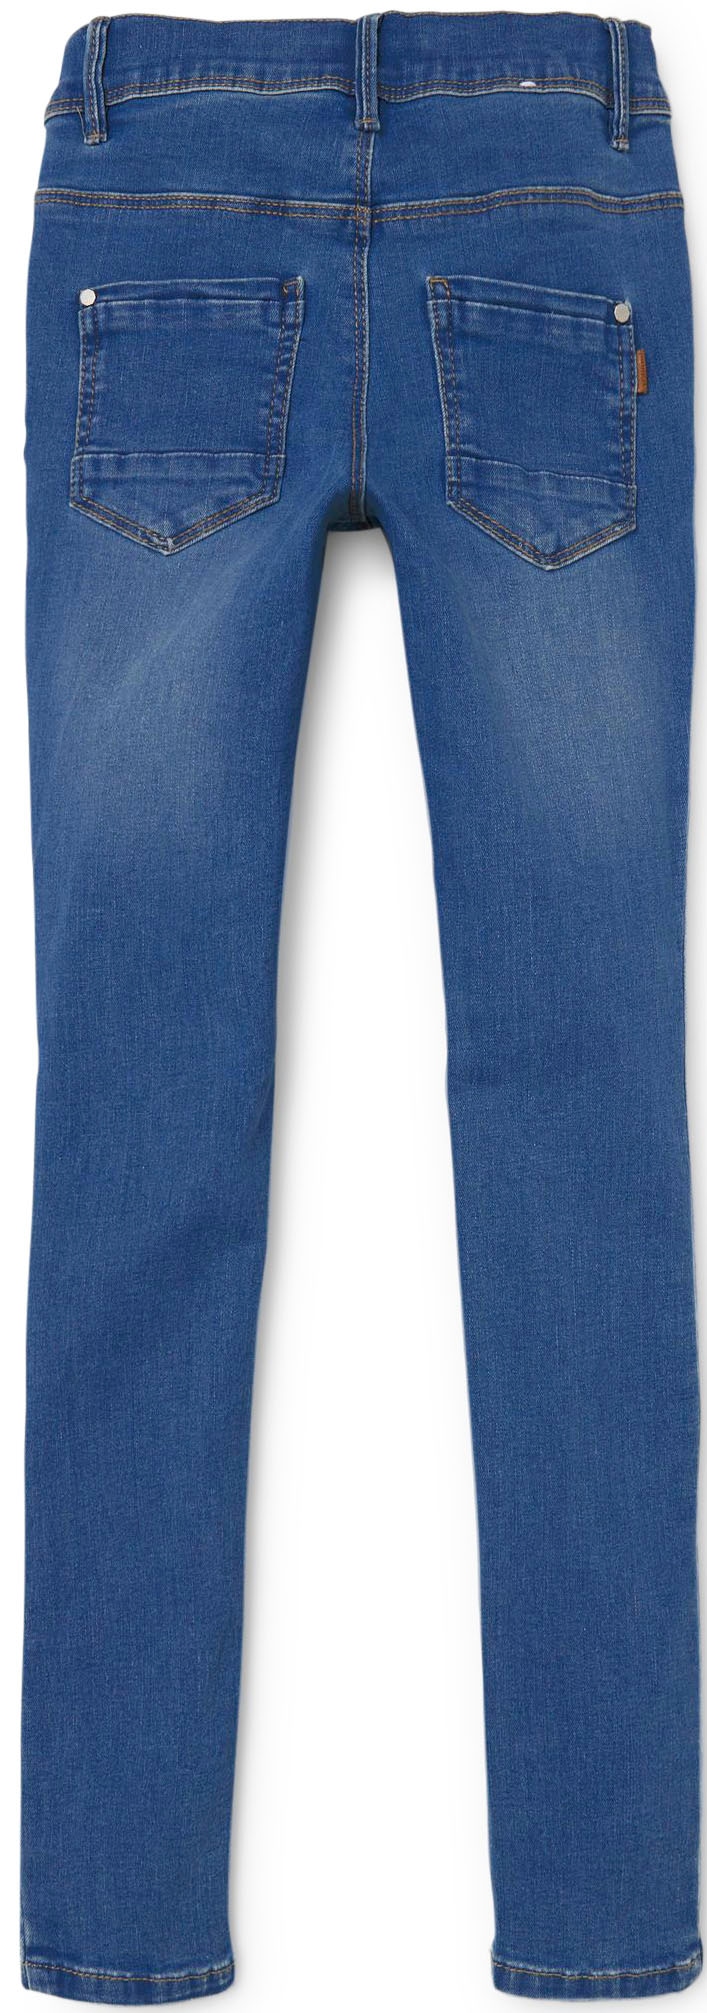 Name It »NKFPOLLY DNMATASI PANT« kaufen Stretch-Jeans online